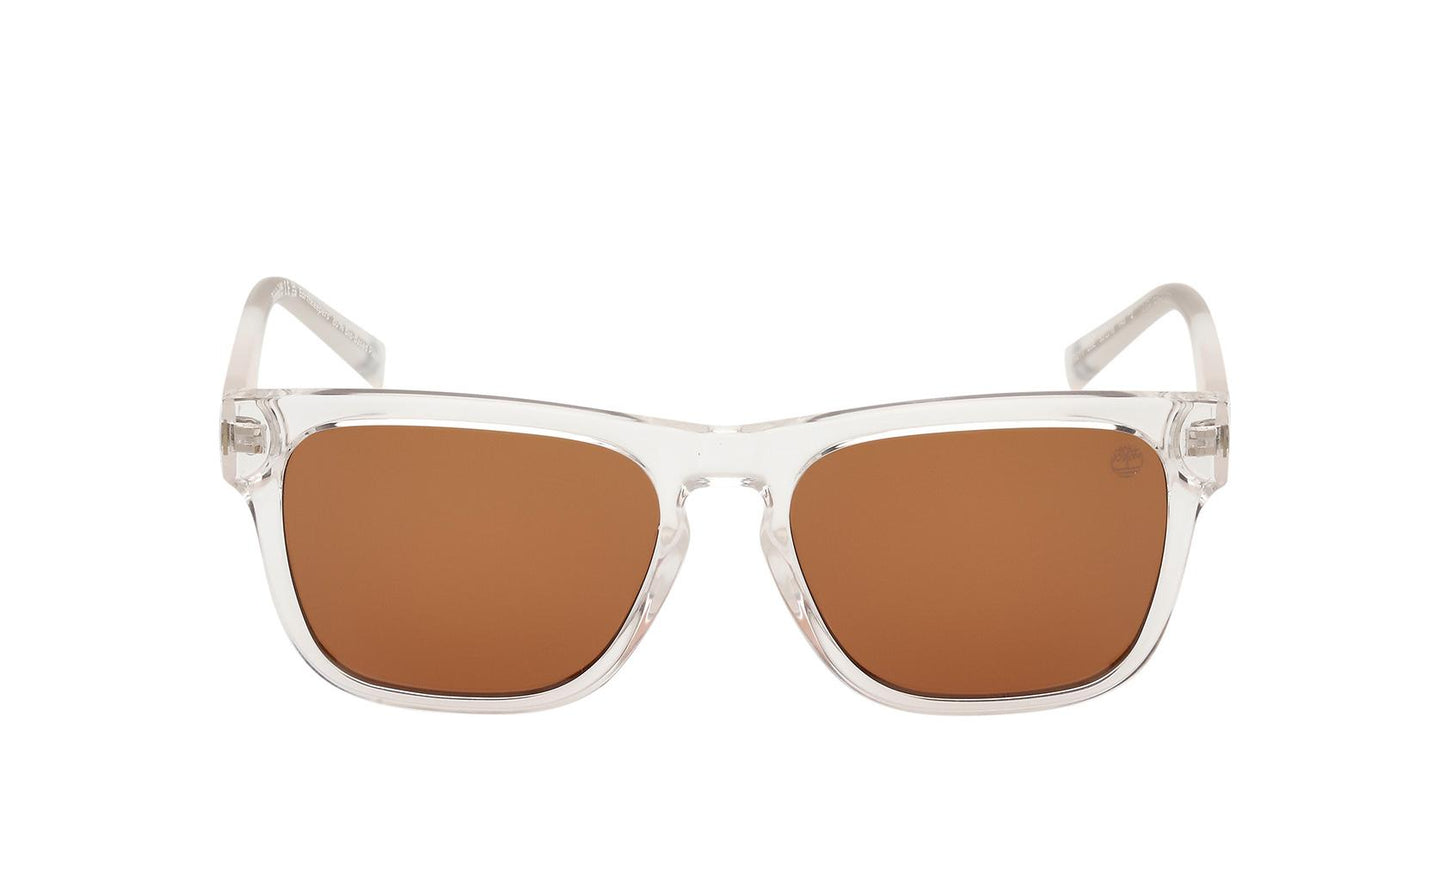 Timberland Sunglasses TB00011 26E